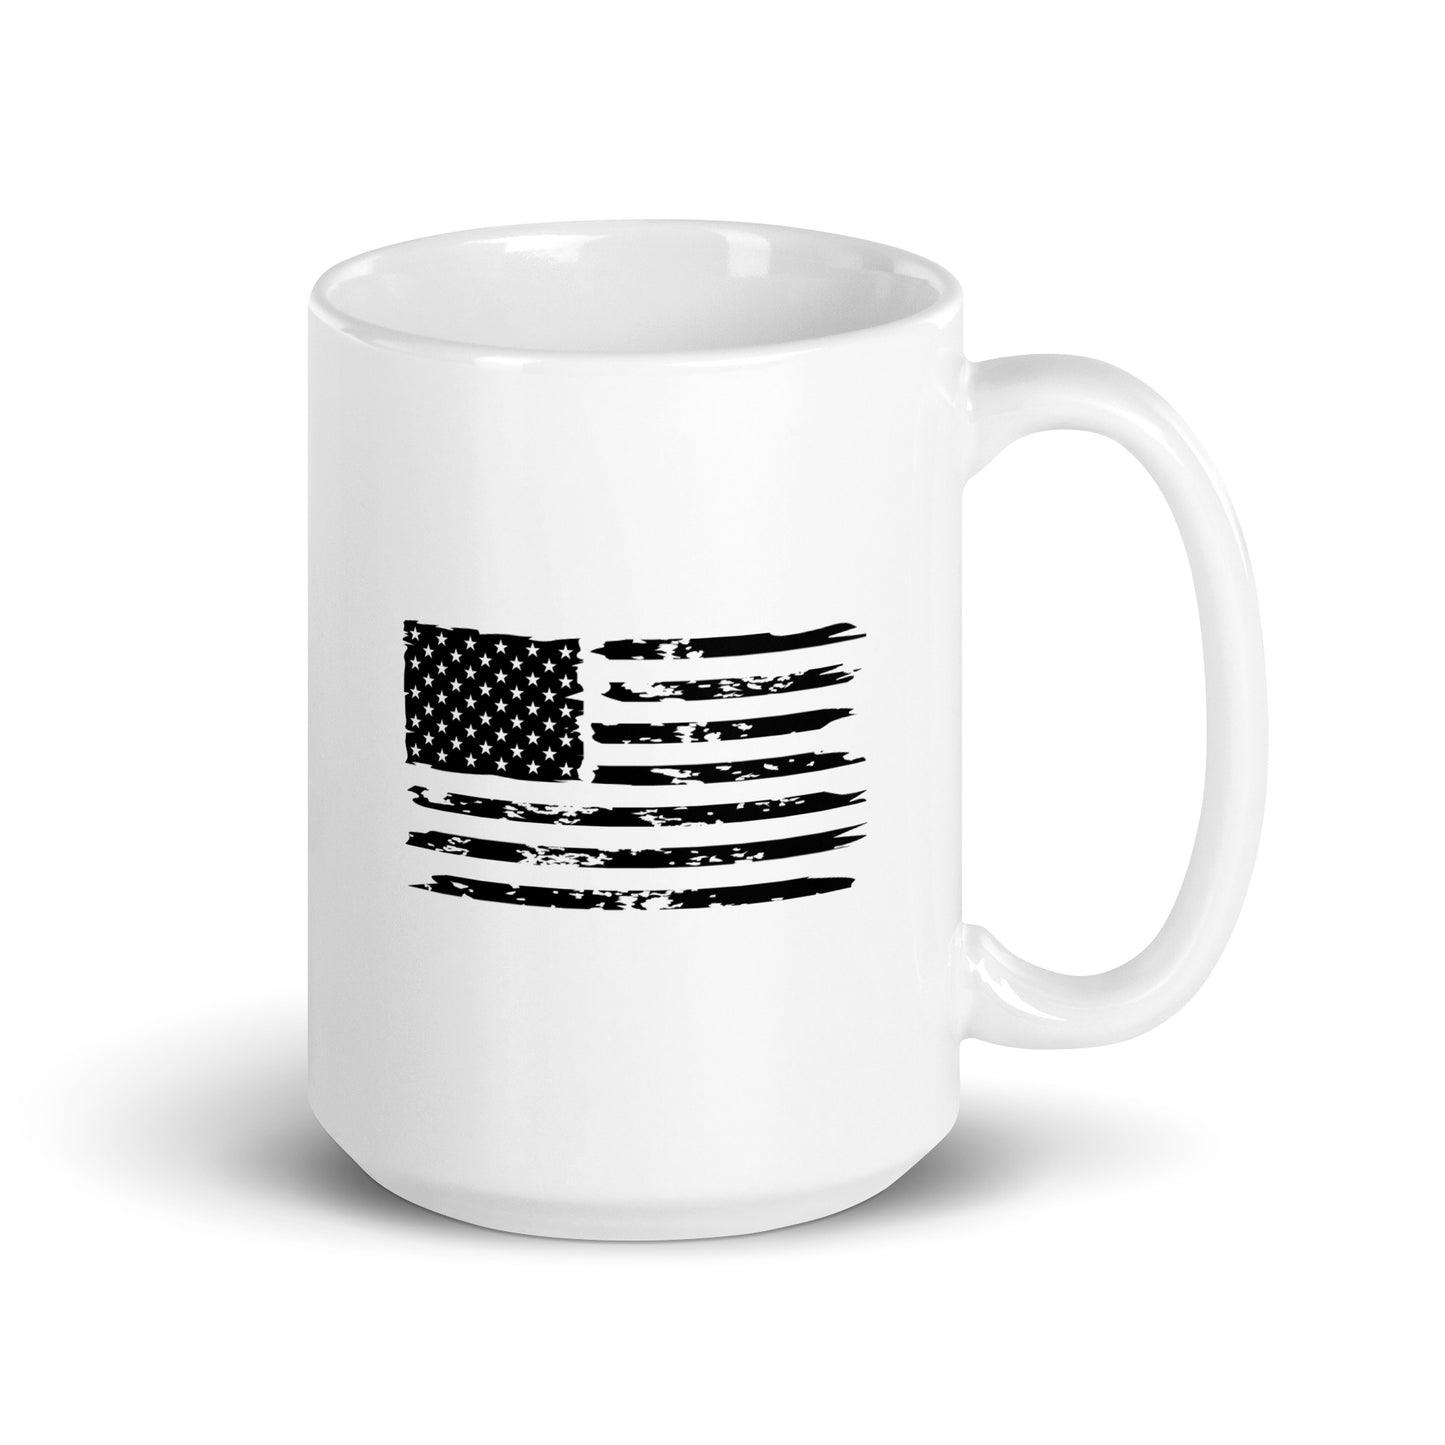 "Distressed Flag" White Glossy Mug